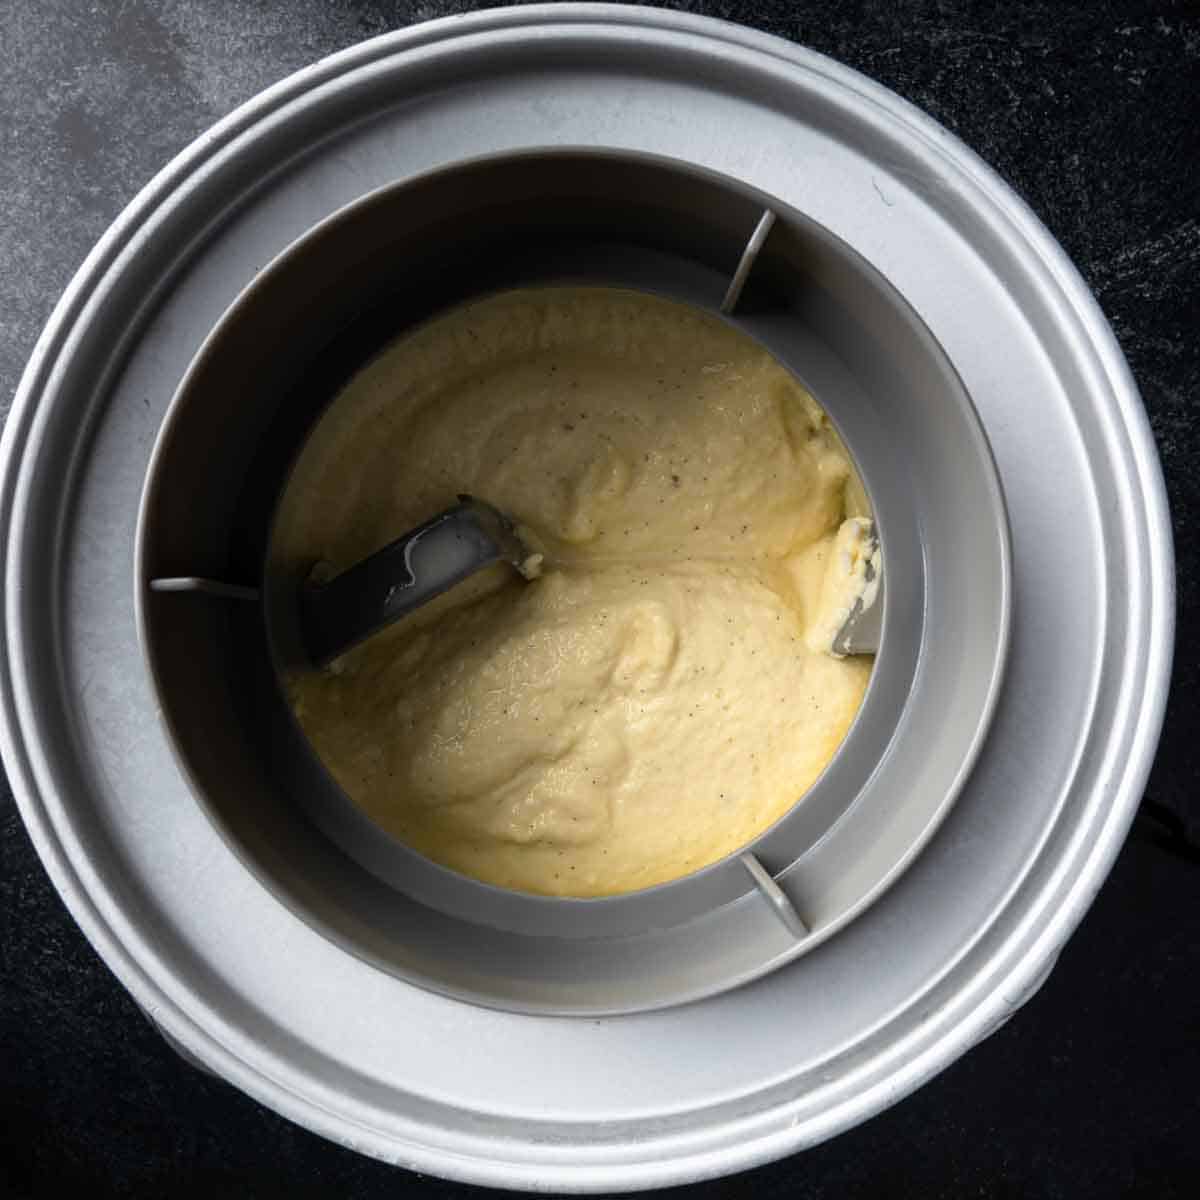 Freshly churned vanilla bean Ince cream in the ice cream maker.